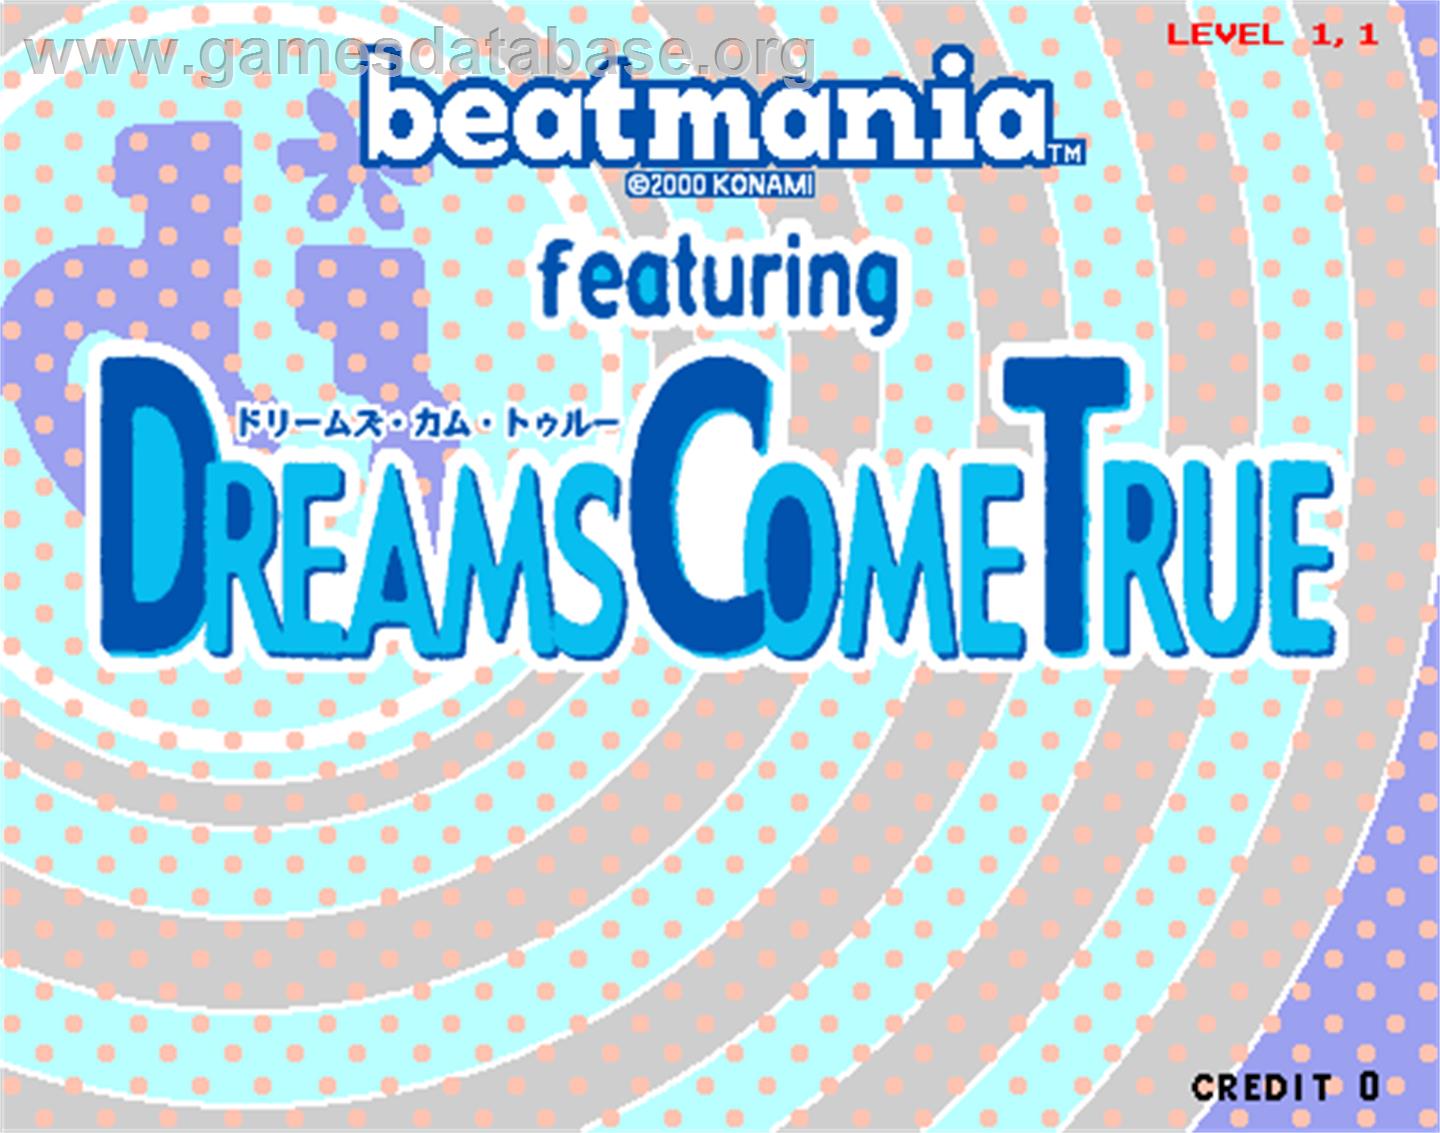 beatmania featuring Dreams Come True - Arcade - Artwork - Title Screen